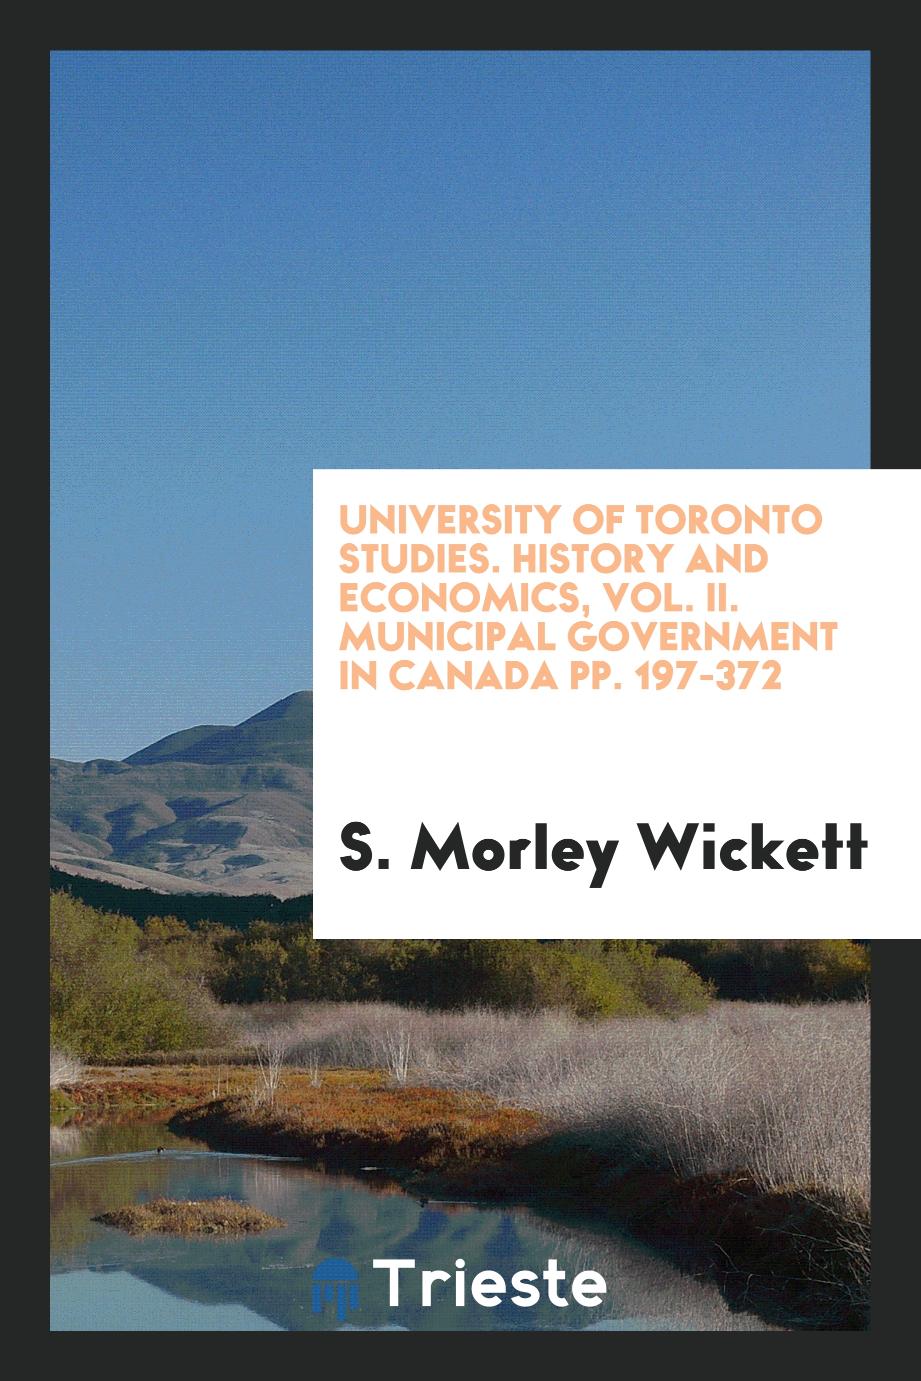 University of Toronto studies. History and economics, Vol. II. Municipal government in Canada pp. 197-372